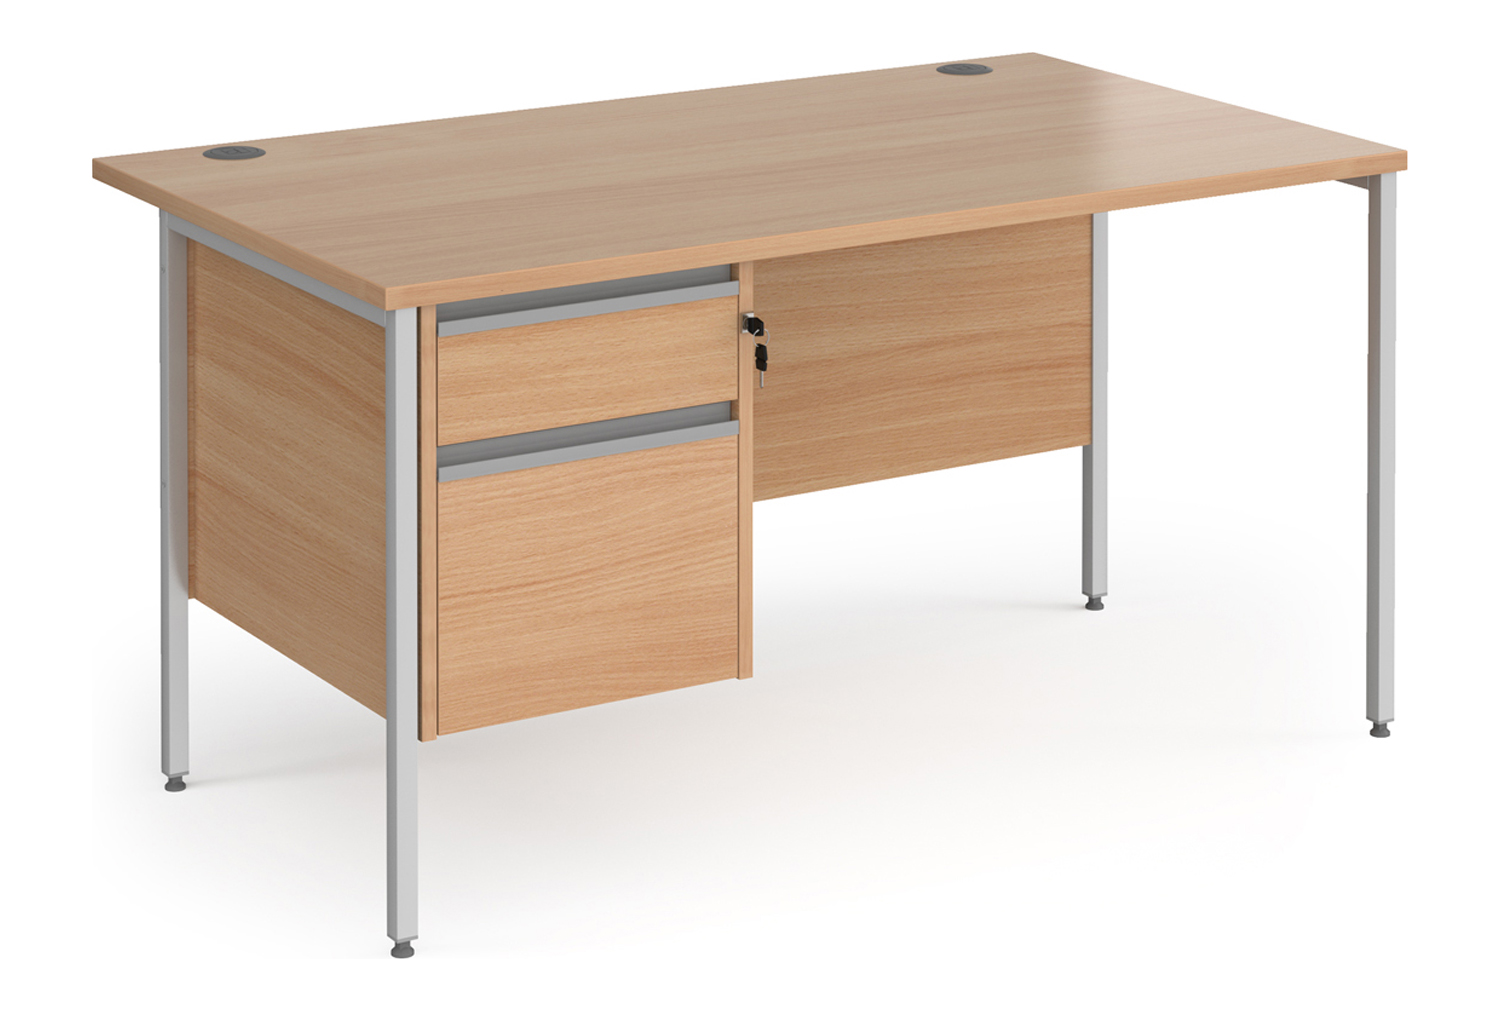 Value Line Classic+ Rectangular H-Leg Office Desk 2 Drawers (Silver Leg), 140wx80dx73h (cm), Beech, Express Delivery